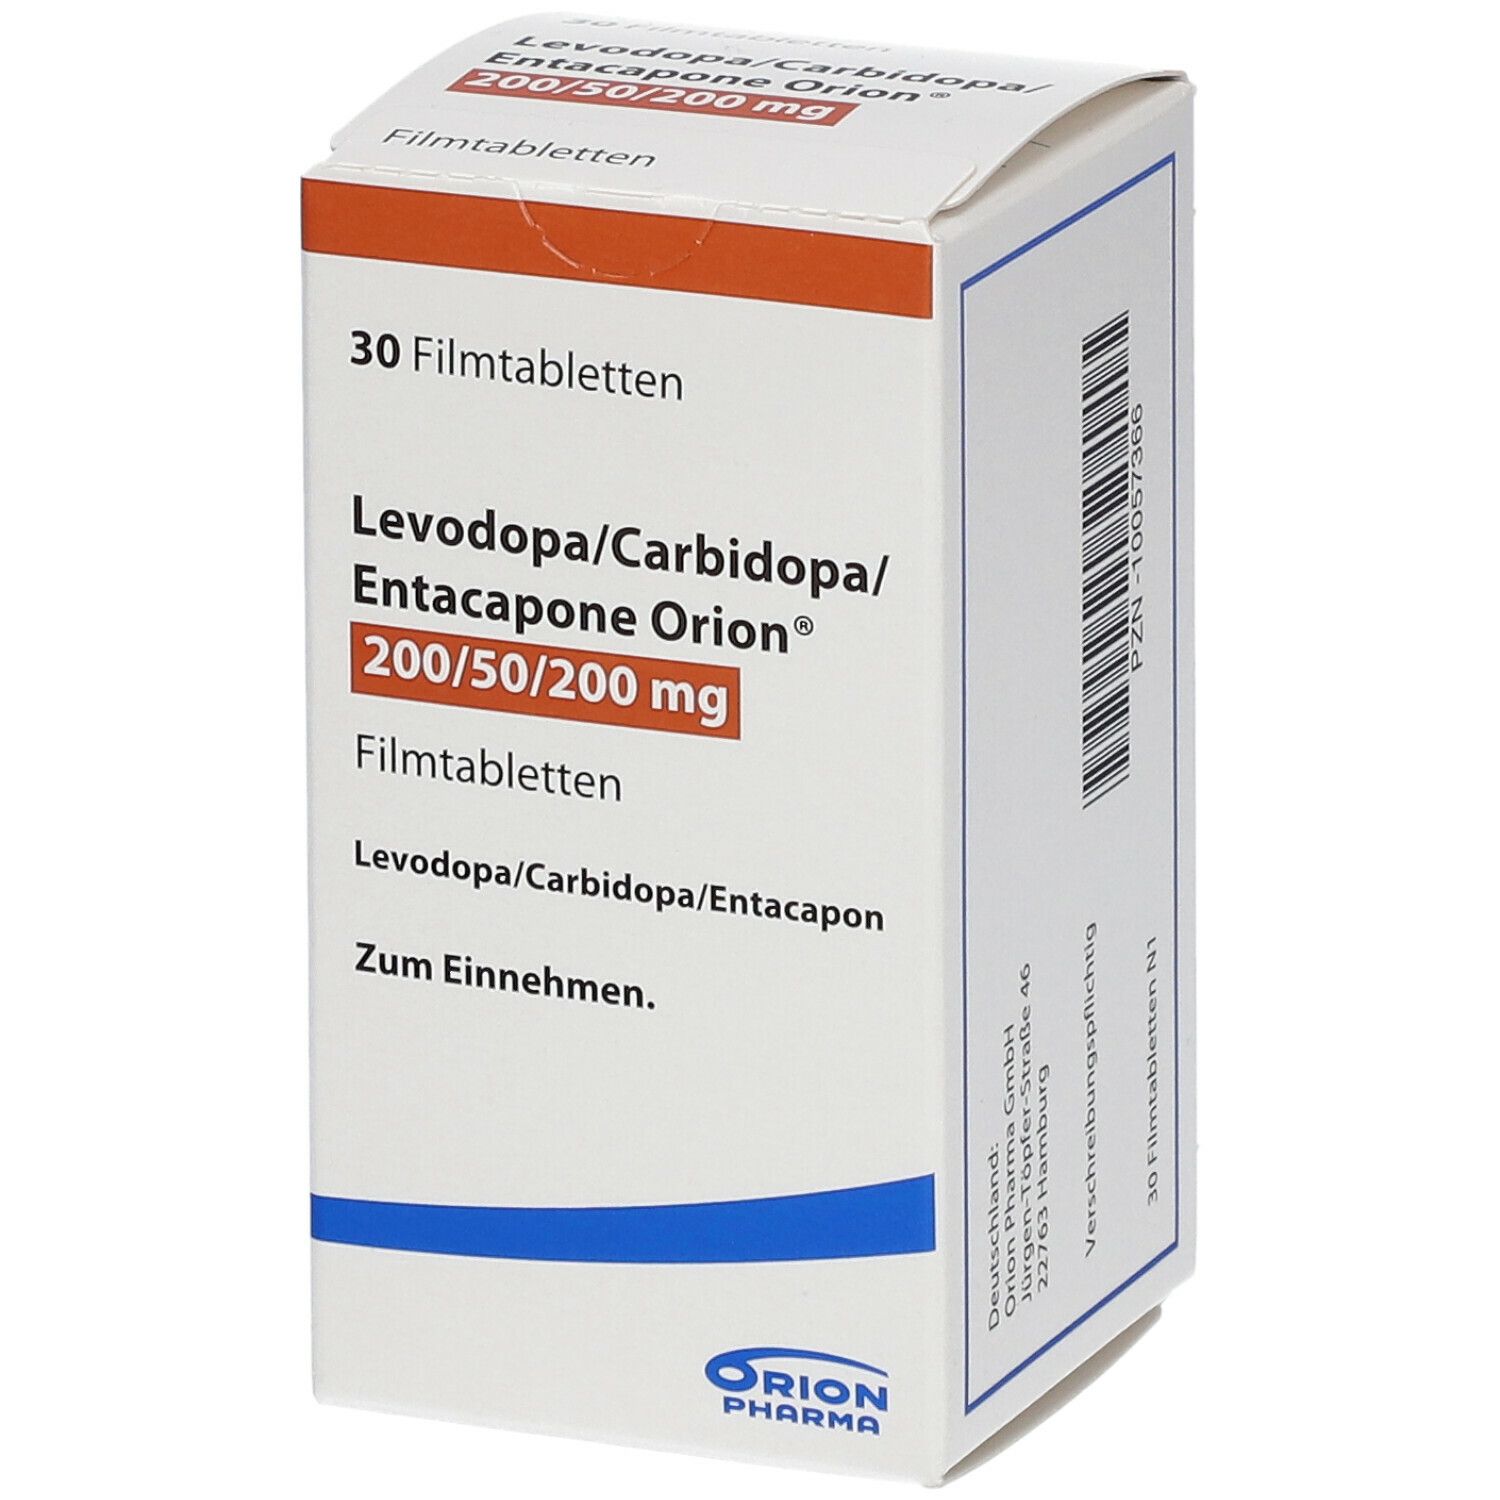 Levodopa/Carbidopa/Entacapone Orion® 200 mg/50 mg/200 mg